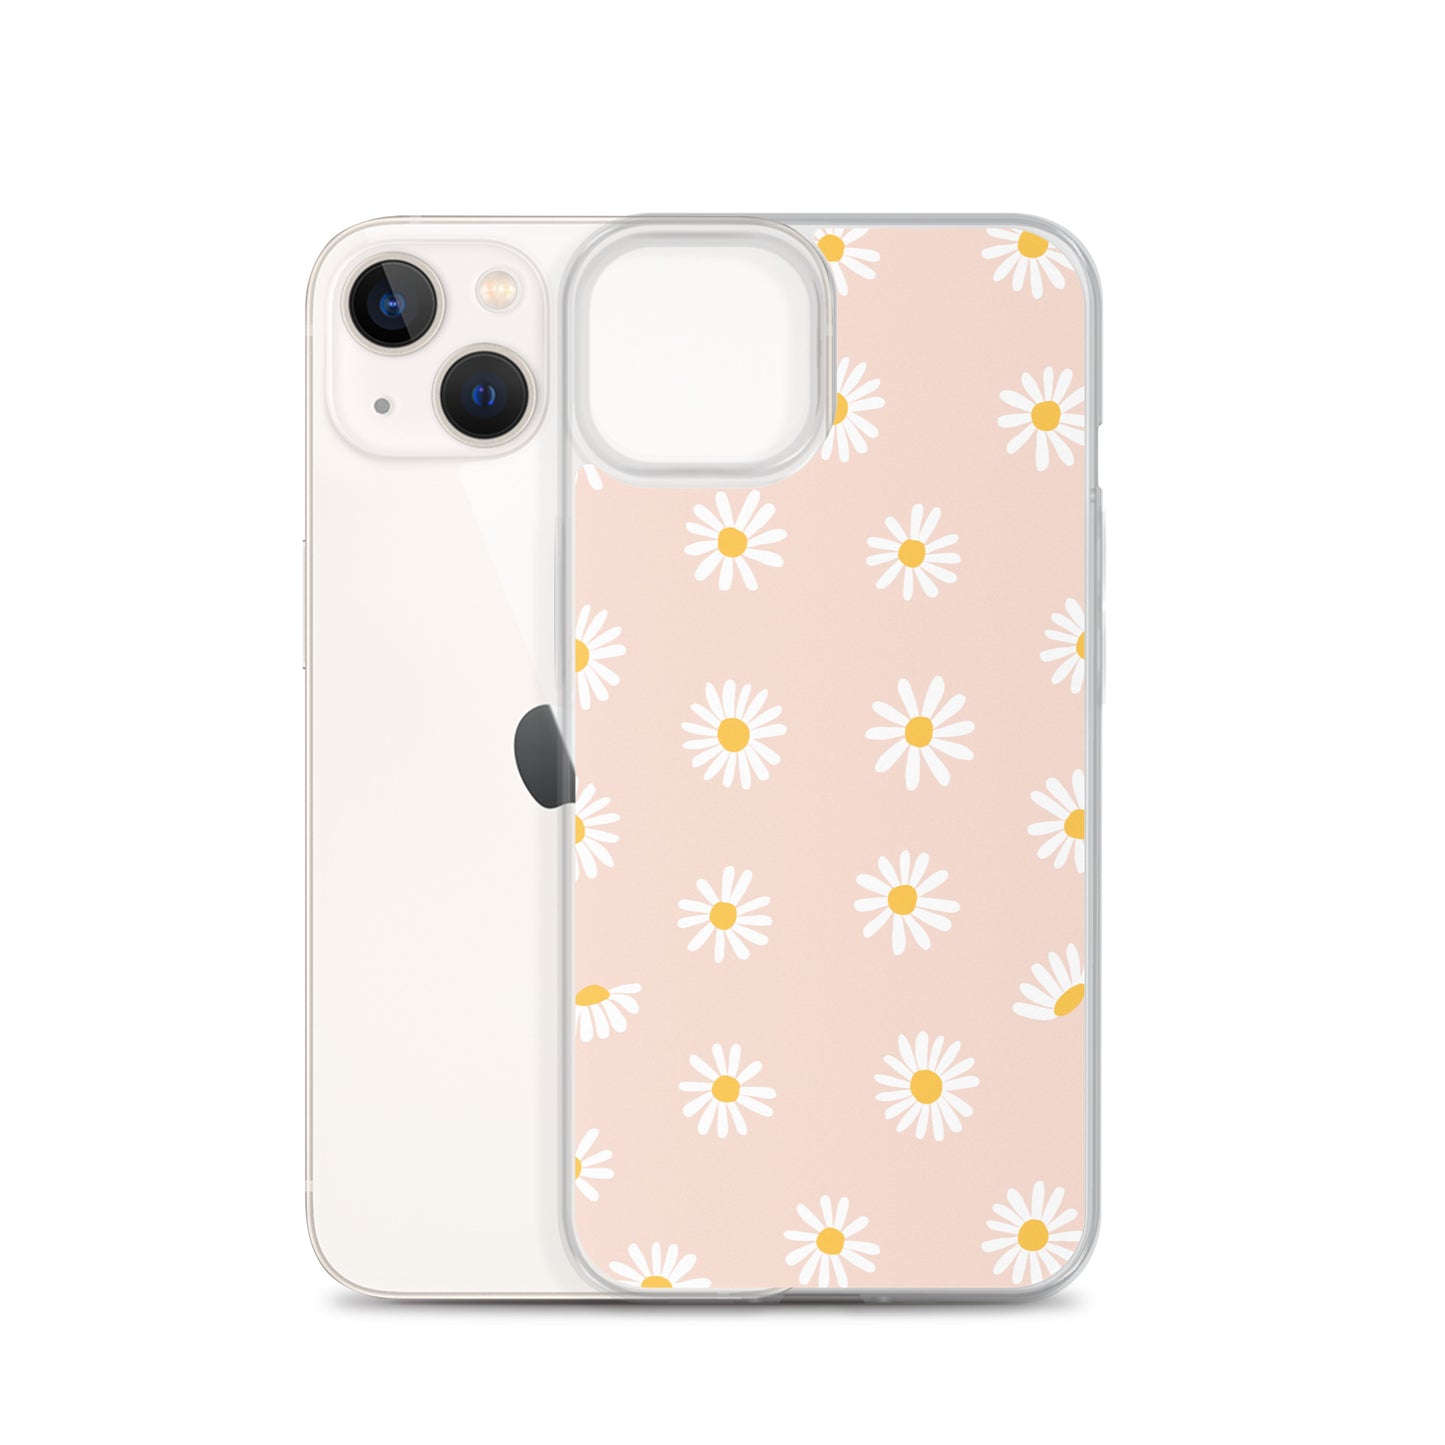 Daisy iPhone case